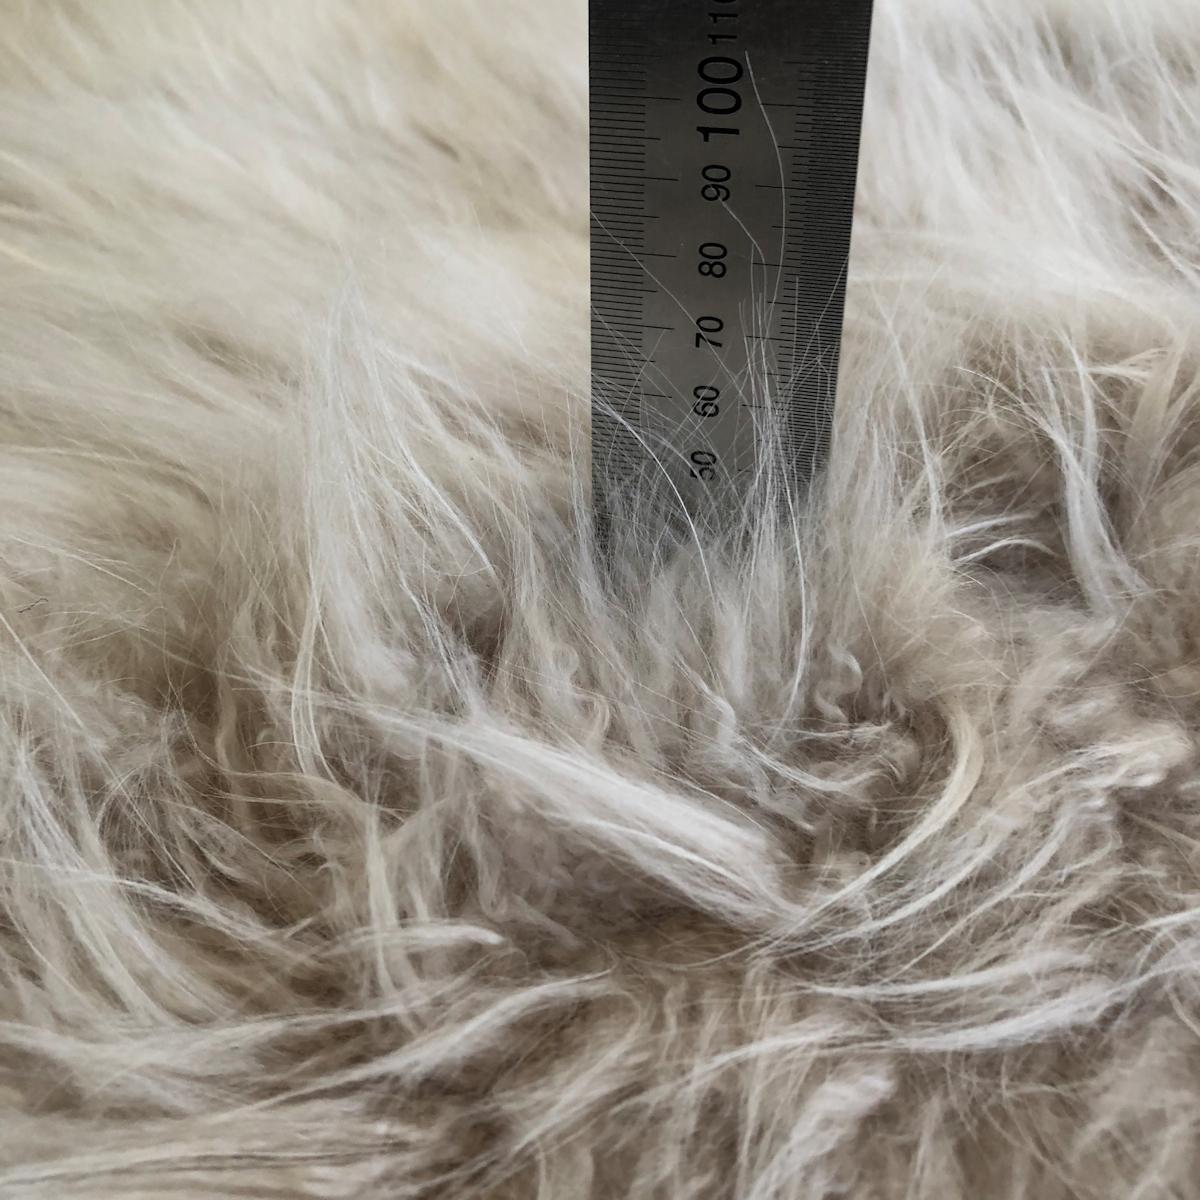 Australian Fur throw Blanket - Cashmere Fur